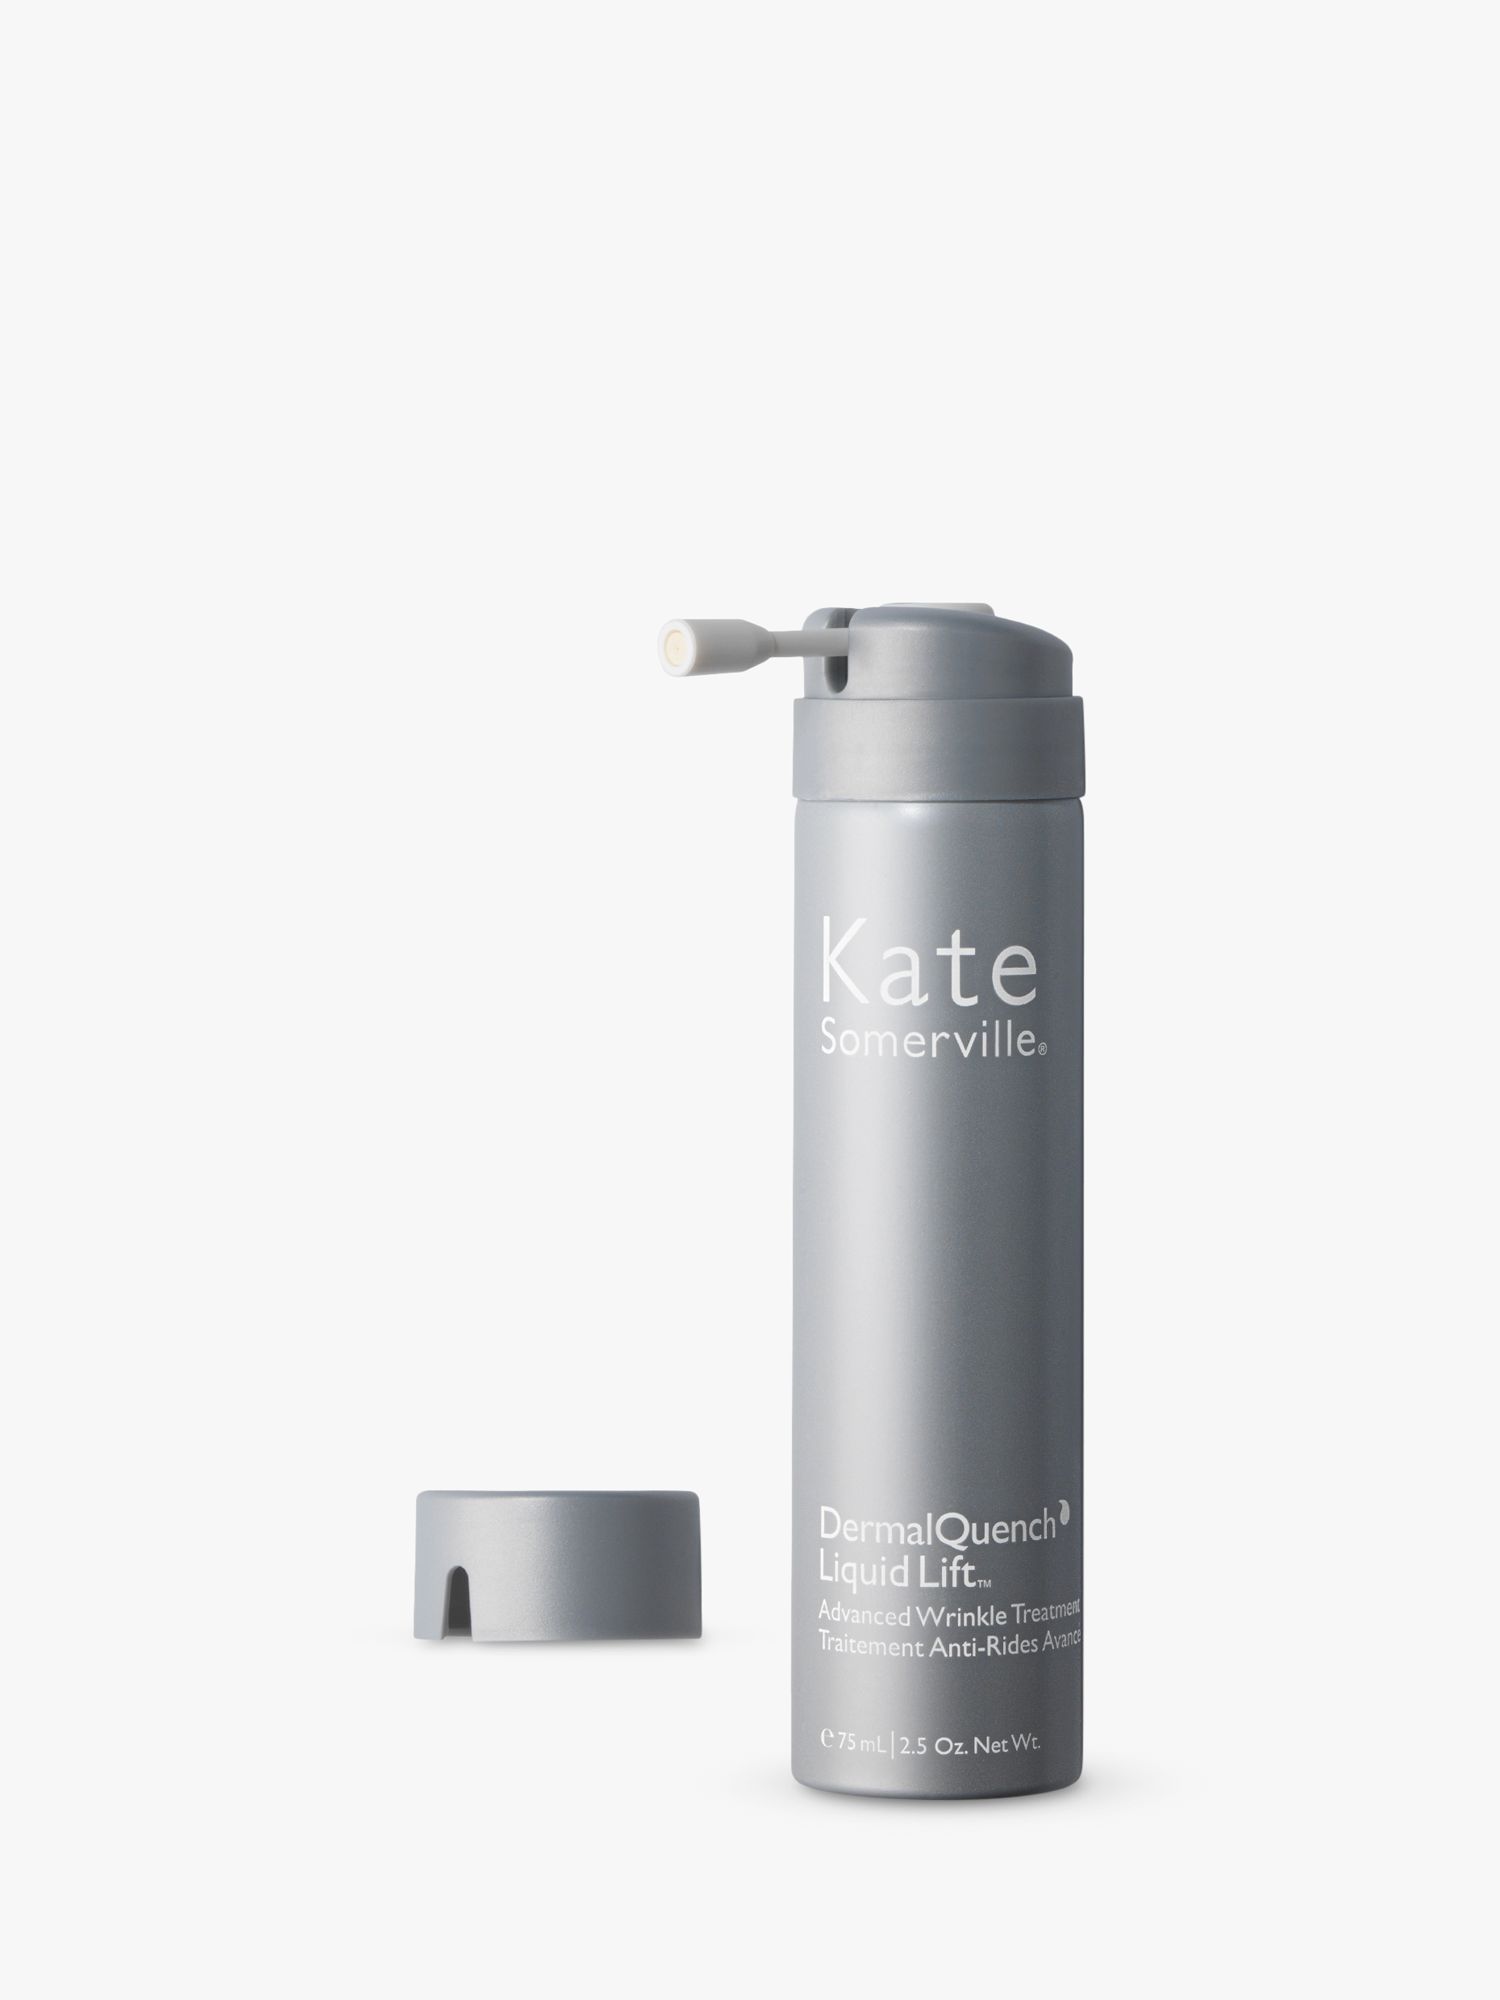 Kate Somerville DermalQuench Liquid Lift Advanced Wrinkle Treatment, 75ml 2